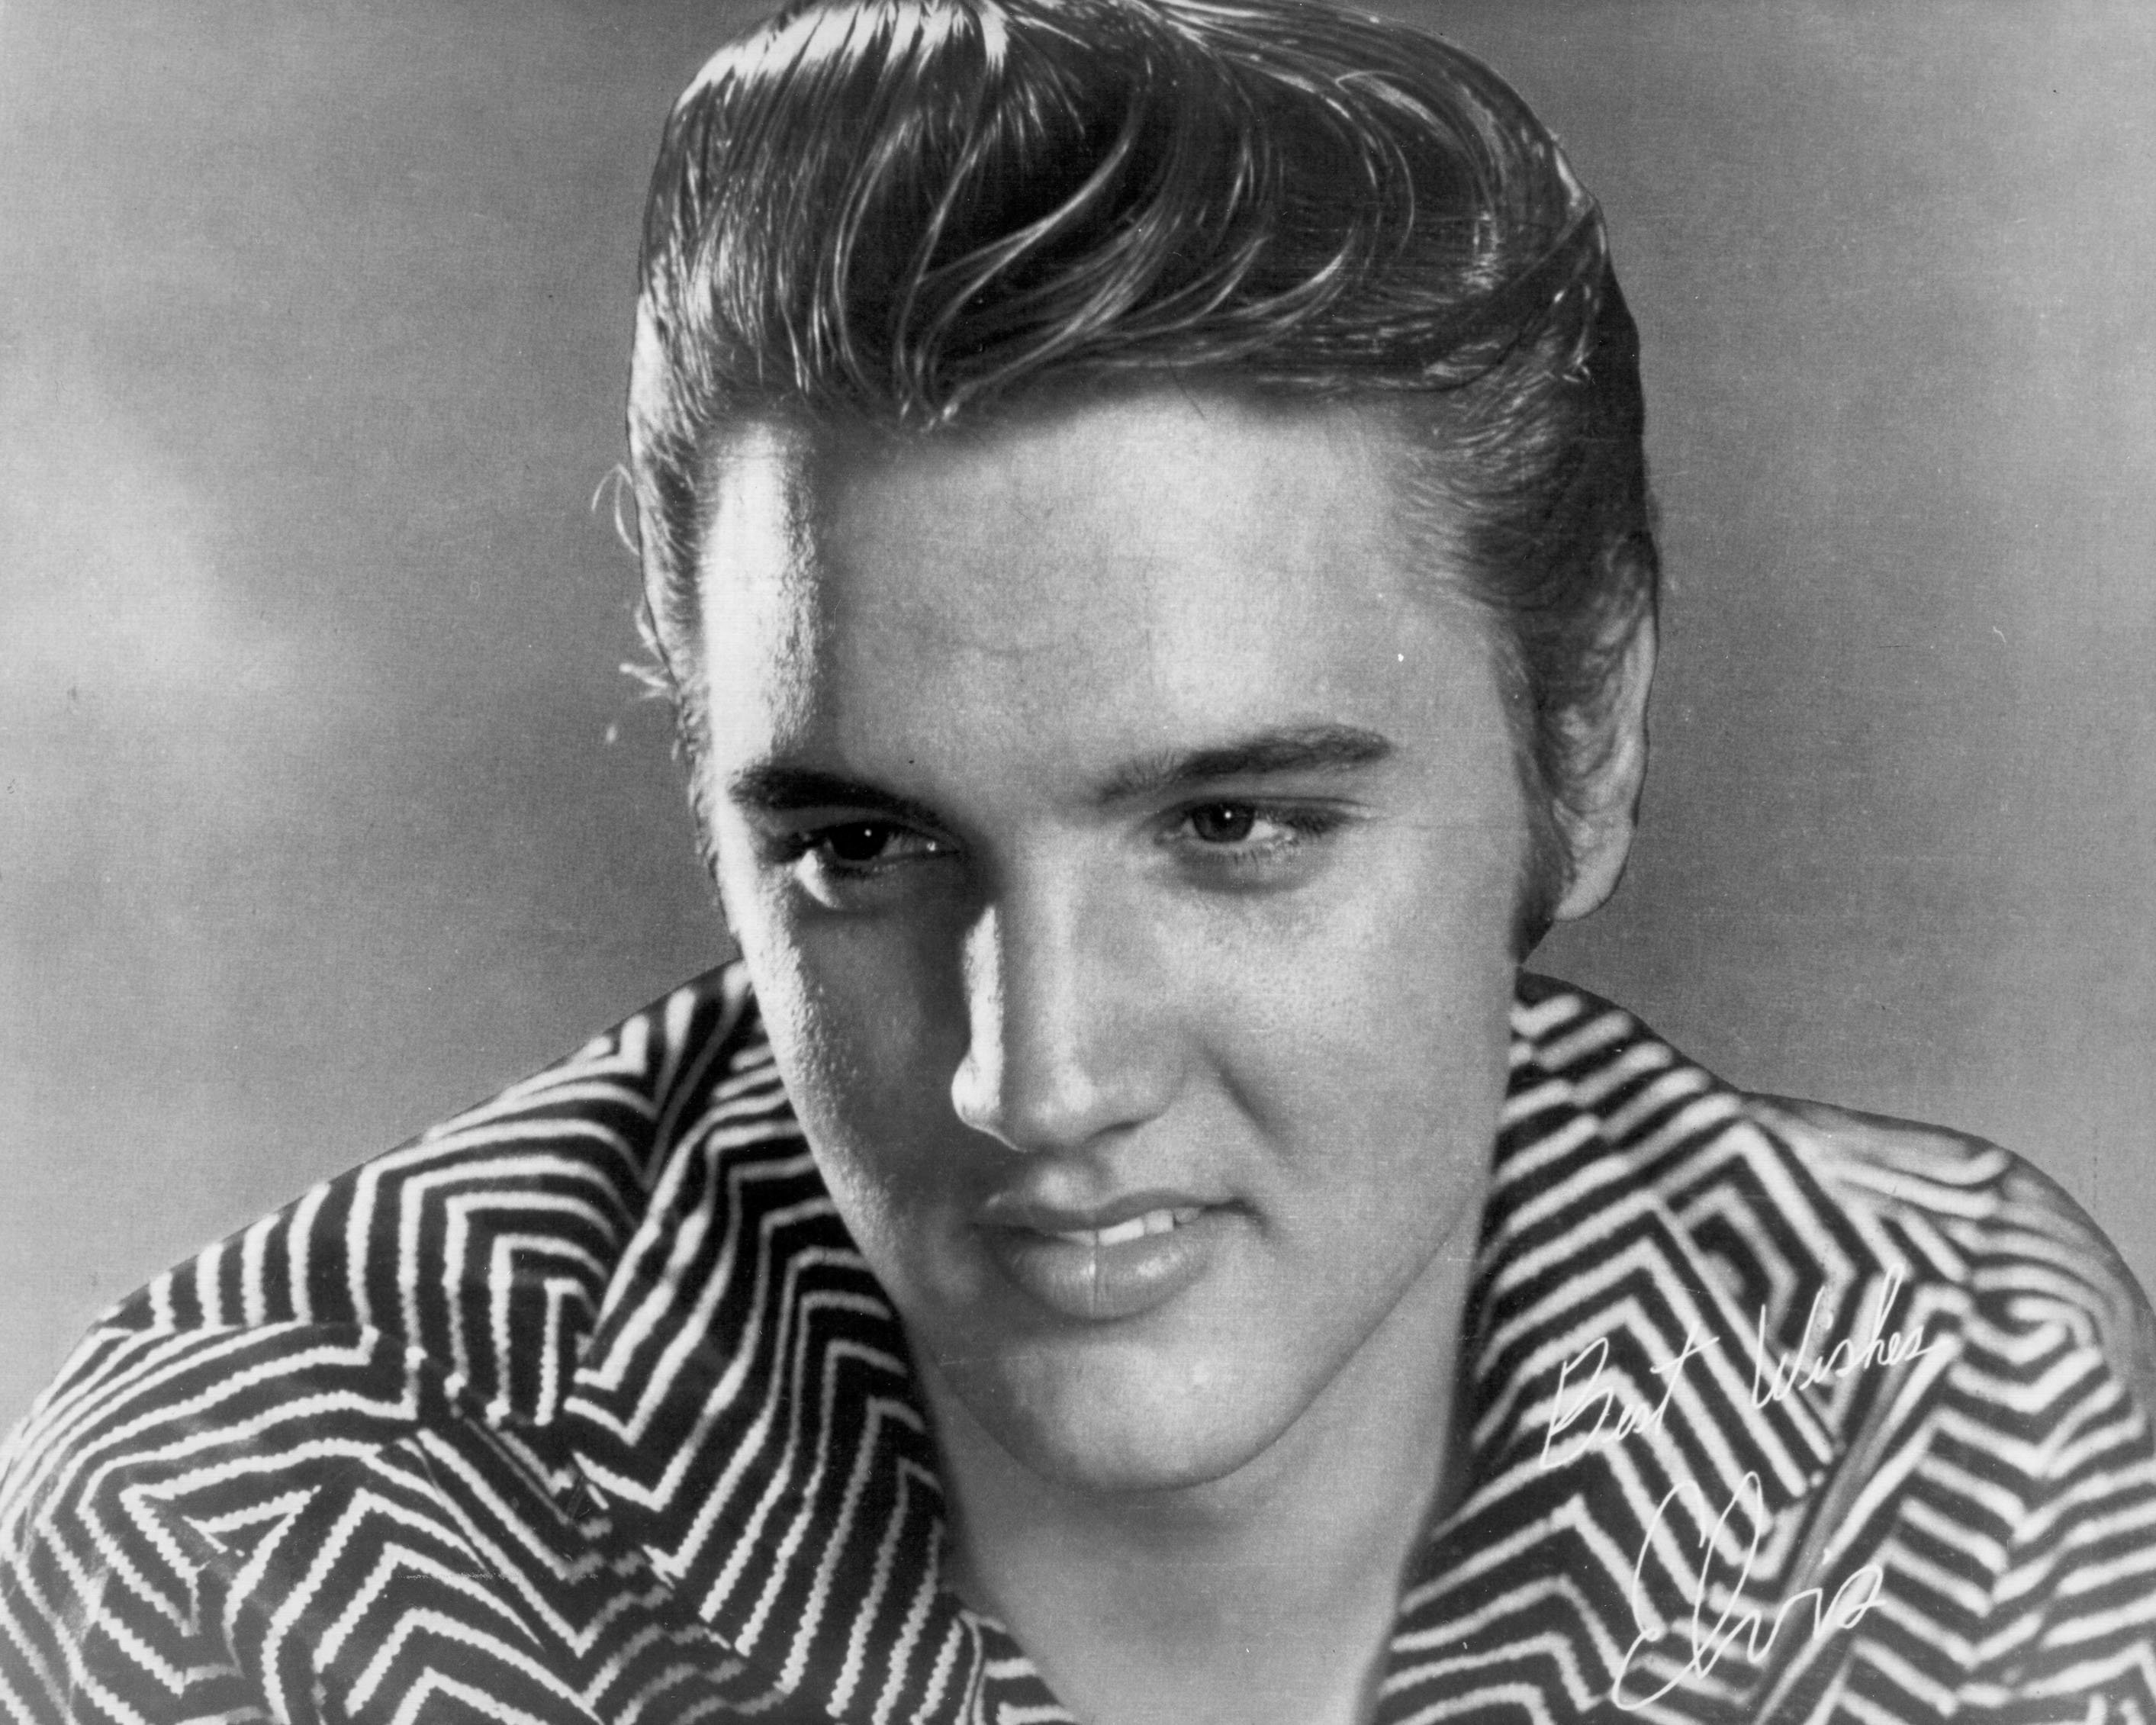 Elvis Presley wearing a striped shirt